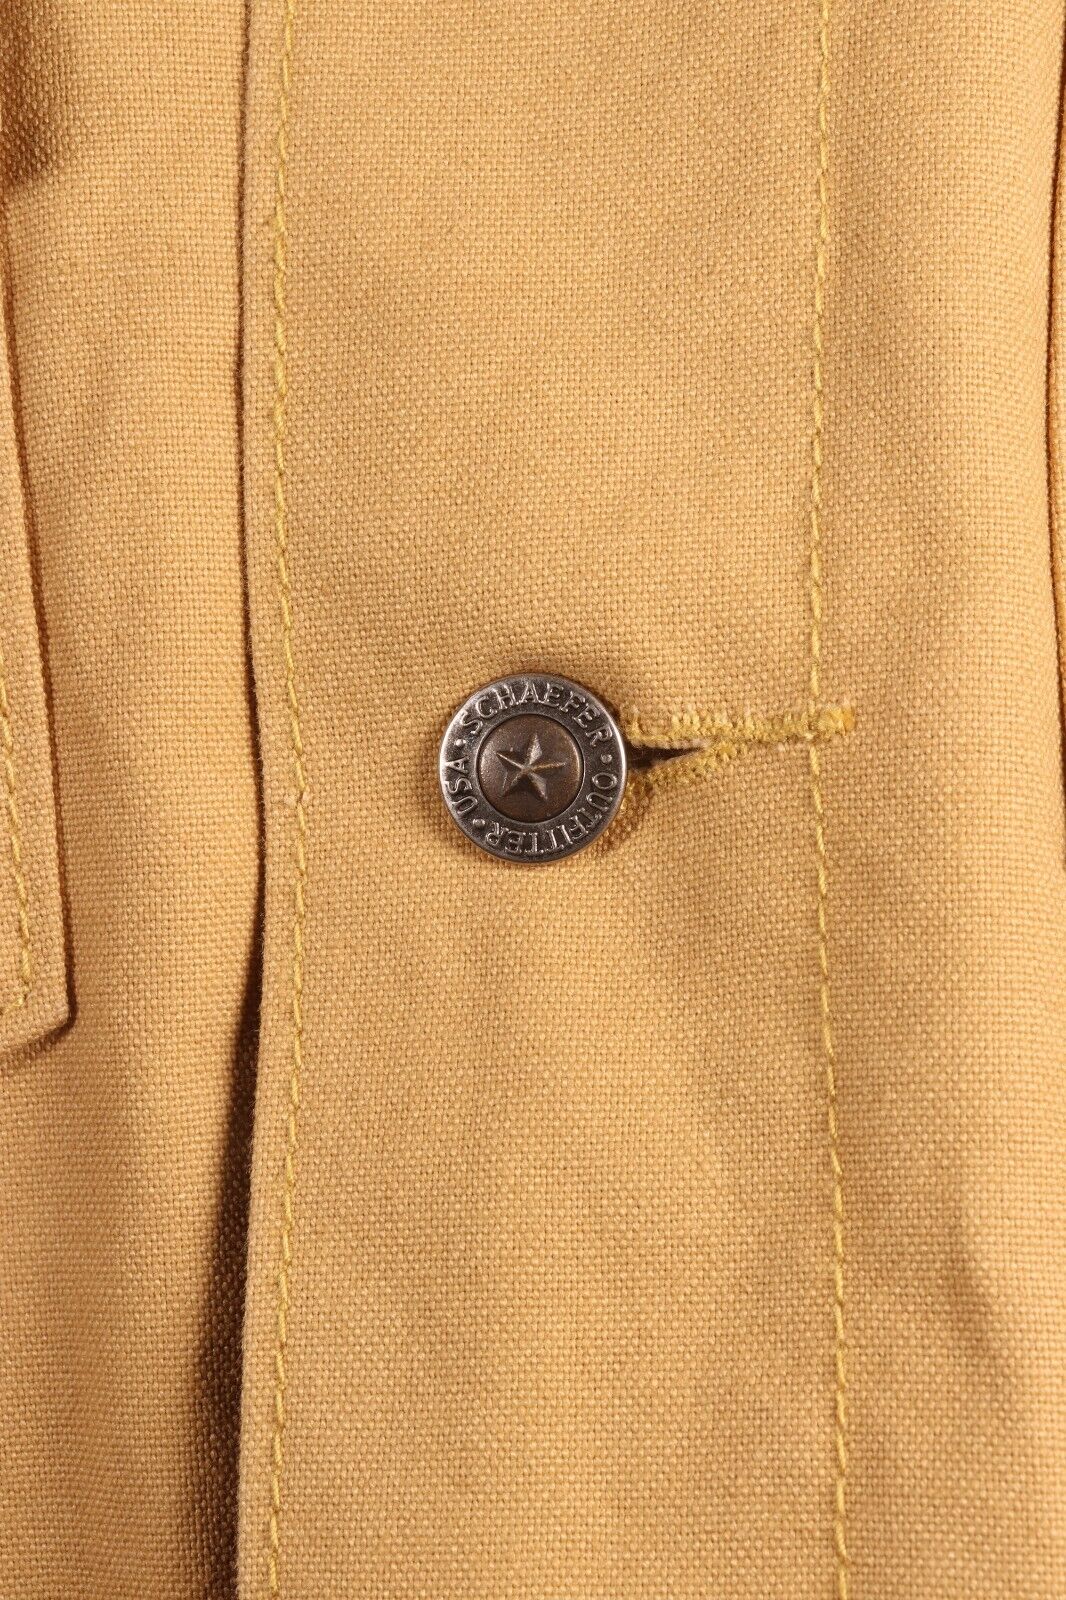 Schaefer Outfitter Men's Jacket Suntan Blanket Lined Vintage Brush L/S (S01)